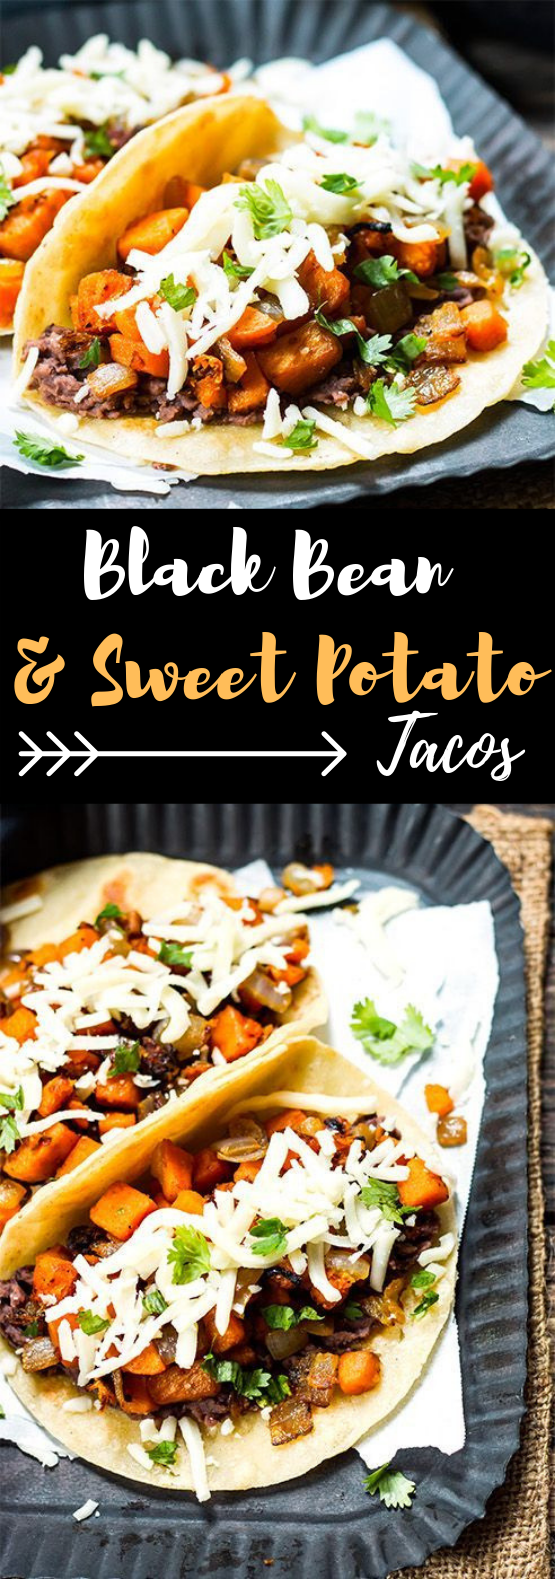 BLACK BEAN & SWEET POTATO TACOS | VEGETARIAN #Healthy #glutenfree